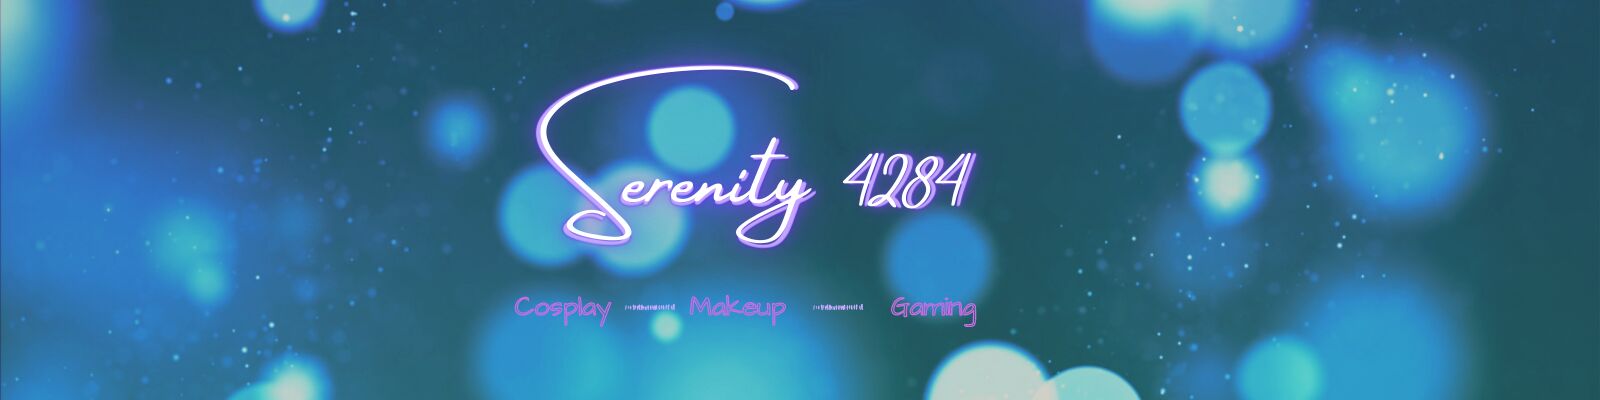 See Serenity4284 profile